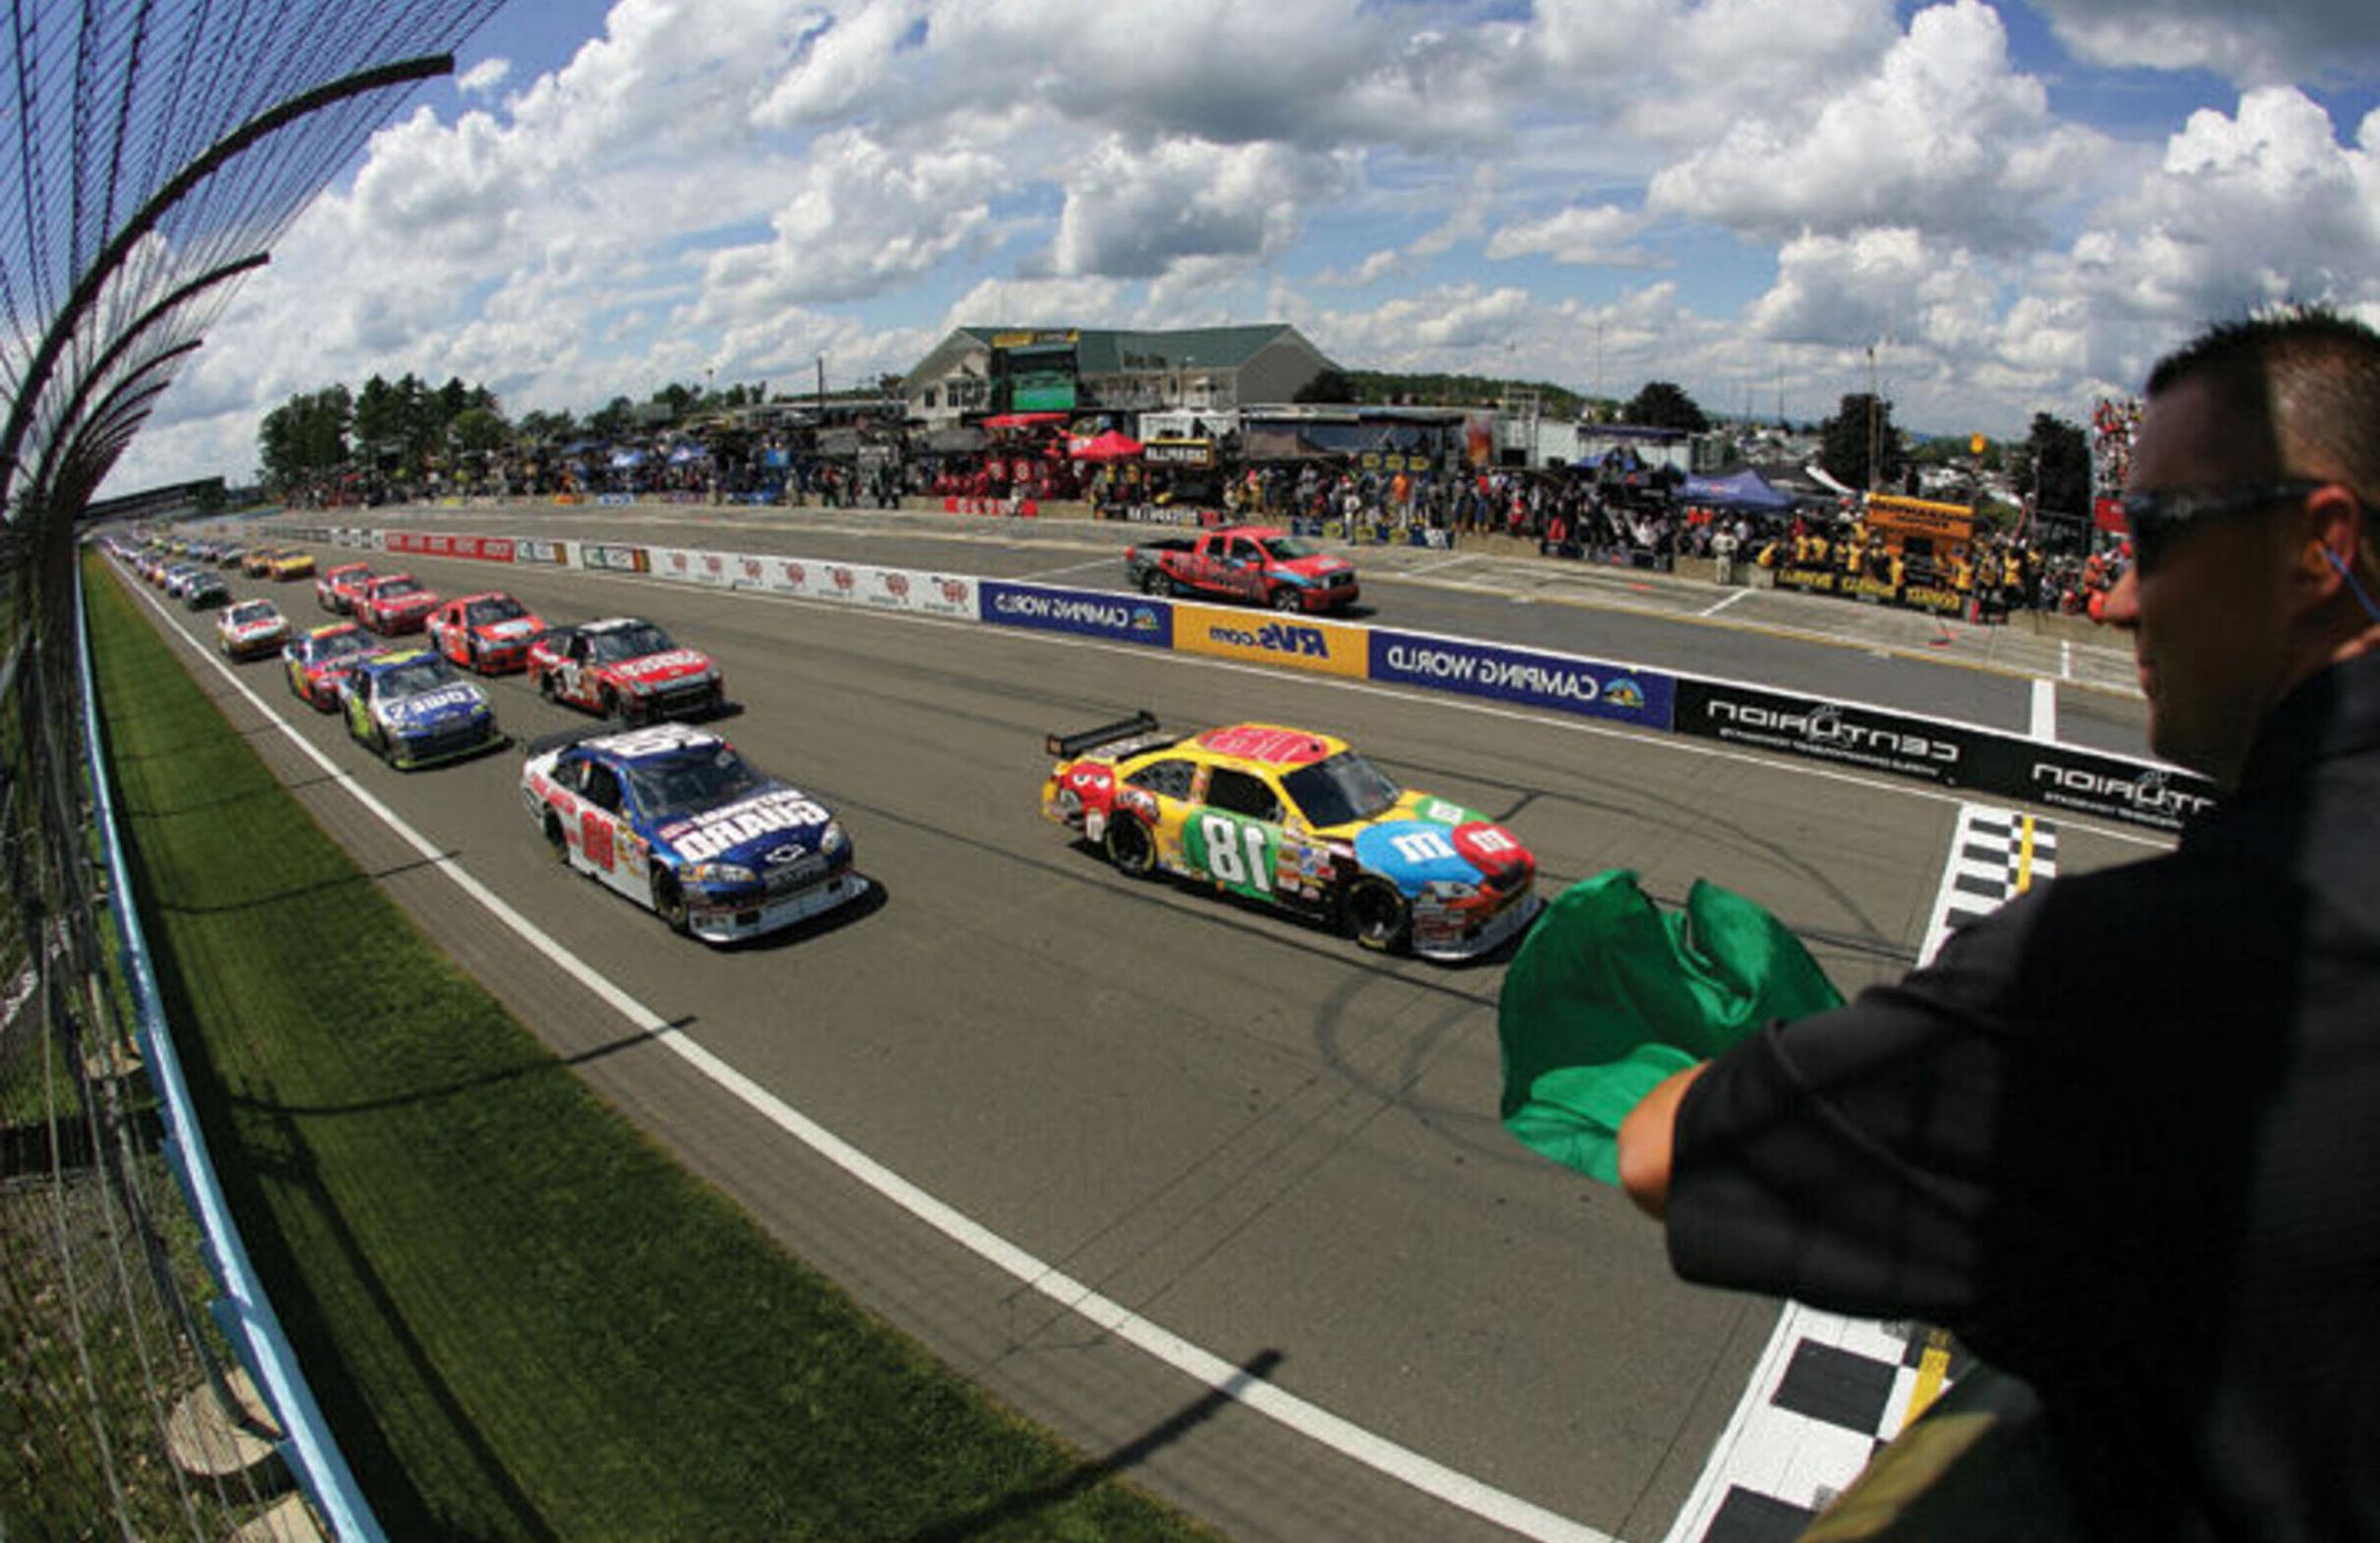 Cars race around the Watkins Glen Motor Speedway track